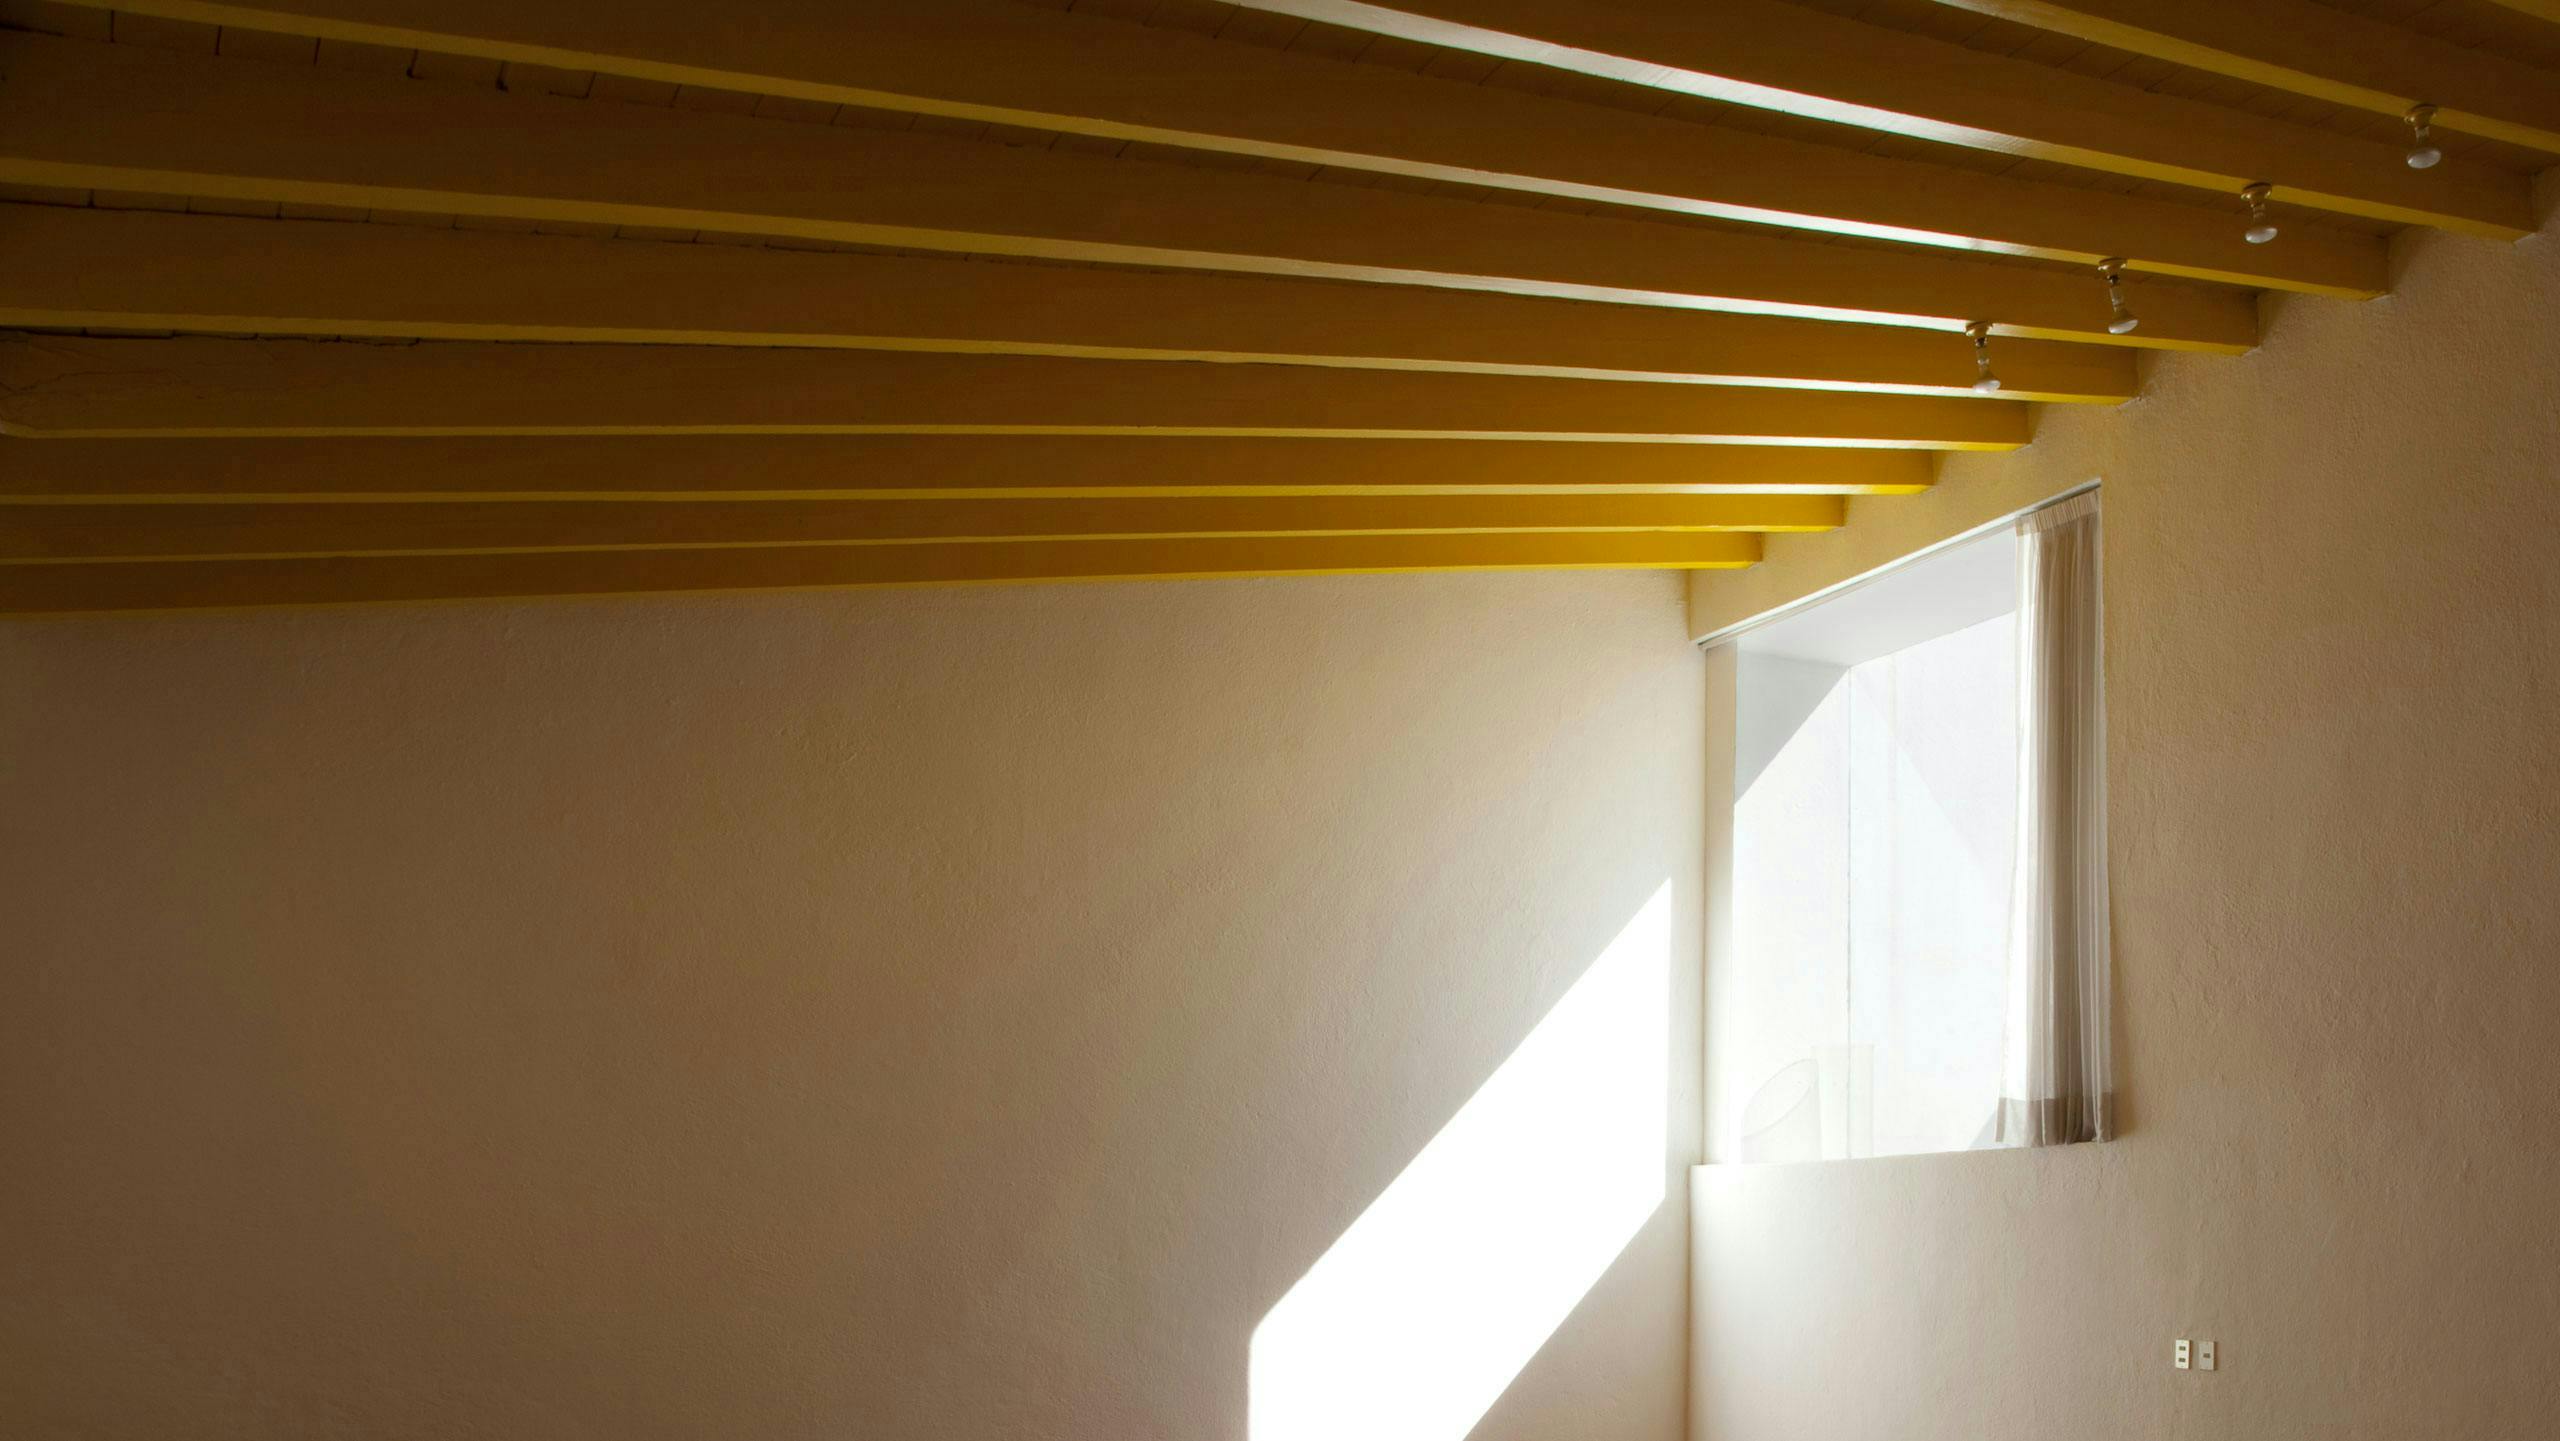 lighting home decor building architecture housing handrail banister flooring wood